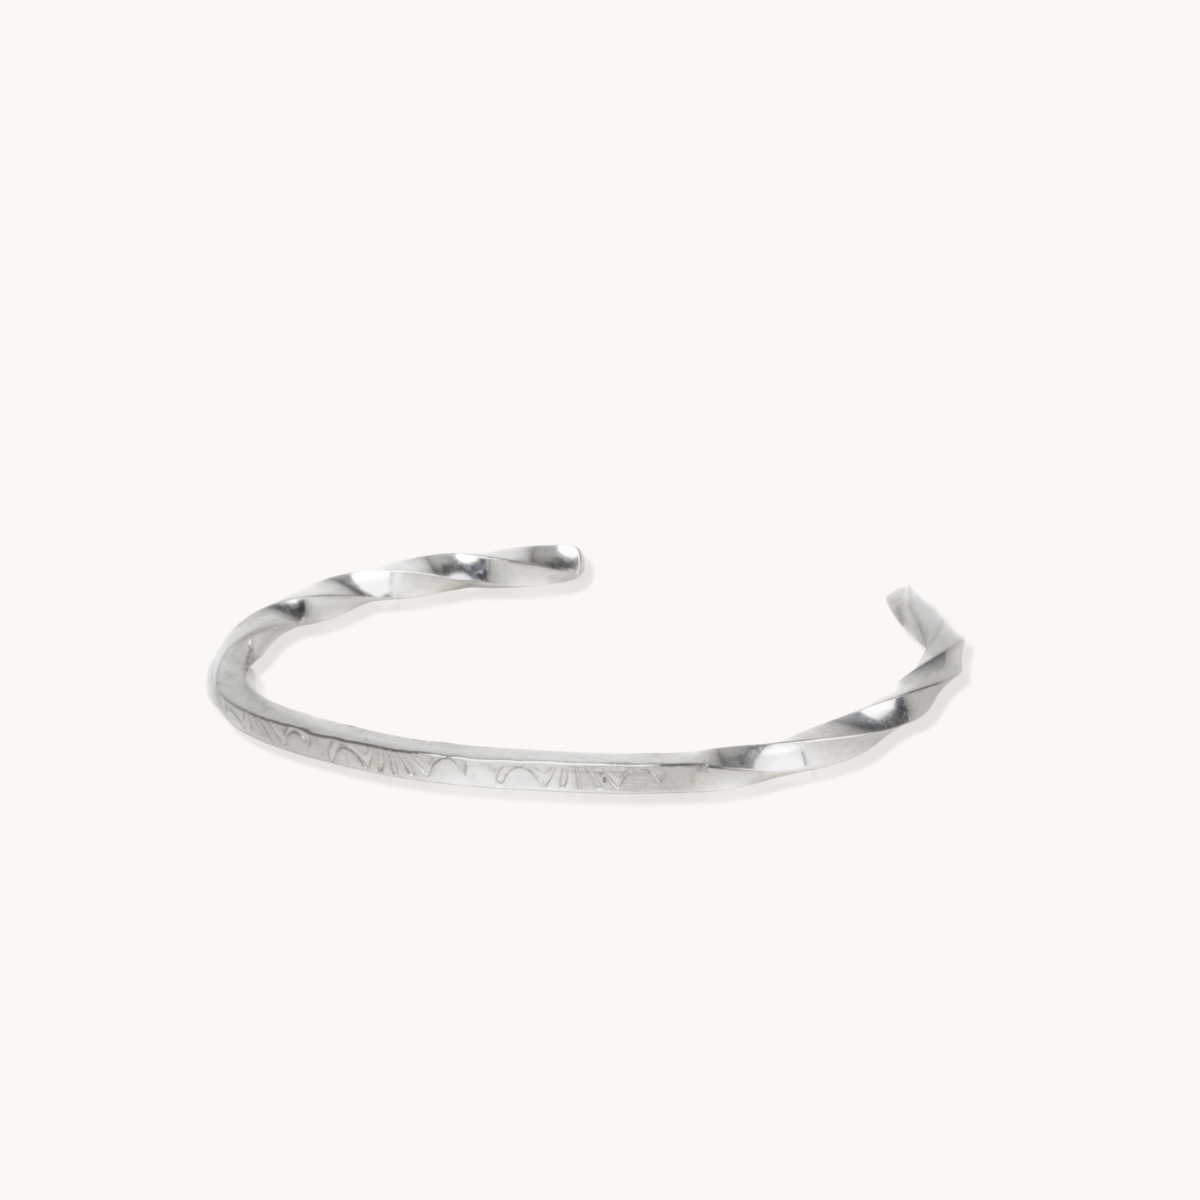 Handcrafted Twist Bracelet in Sterling Silver | T.Skies Jewelry